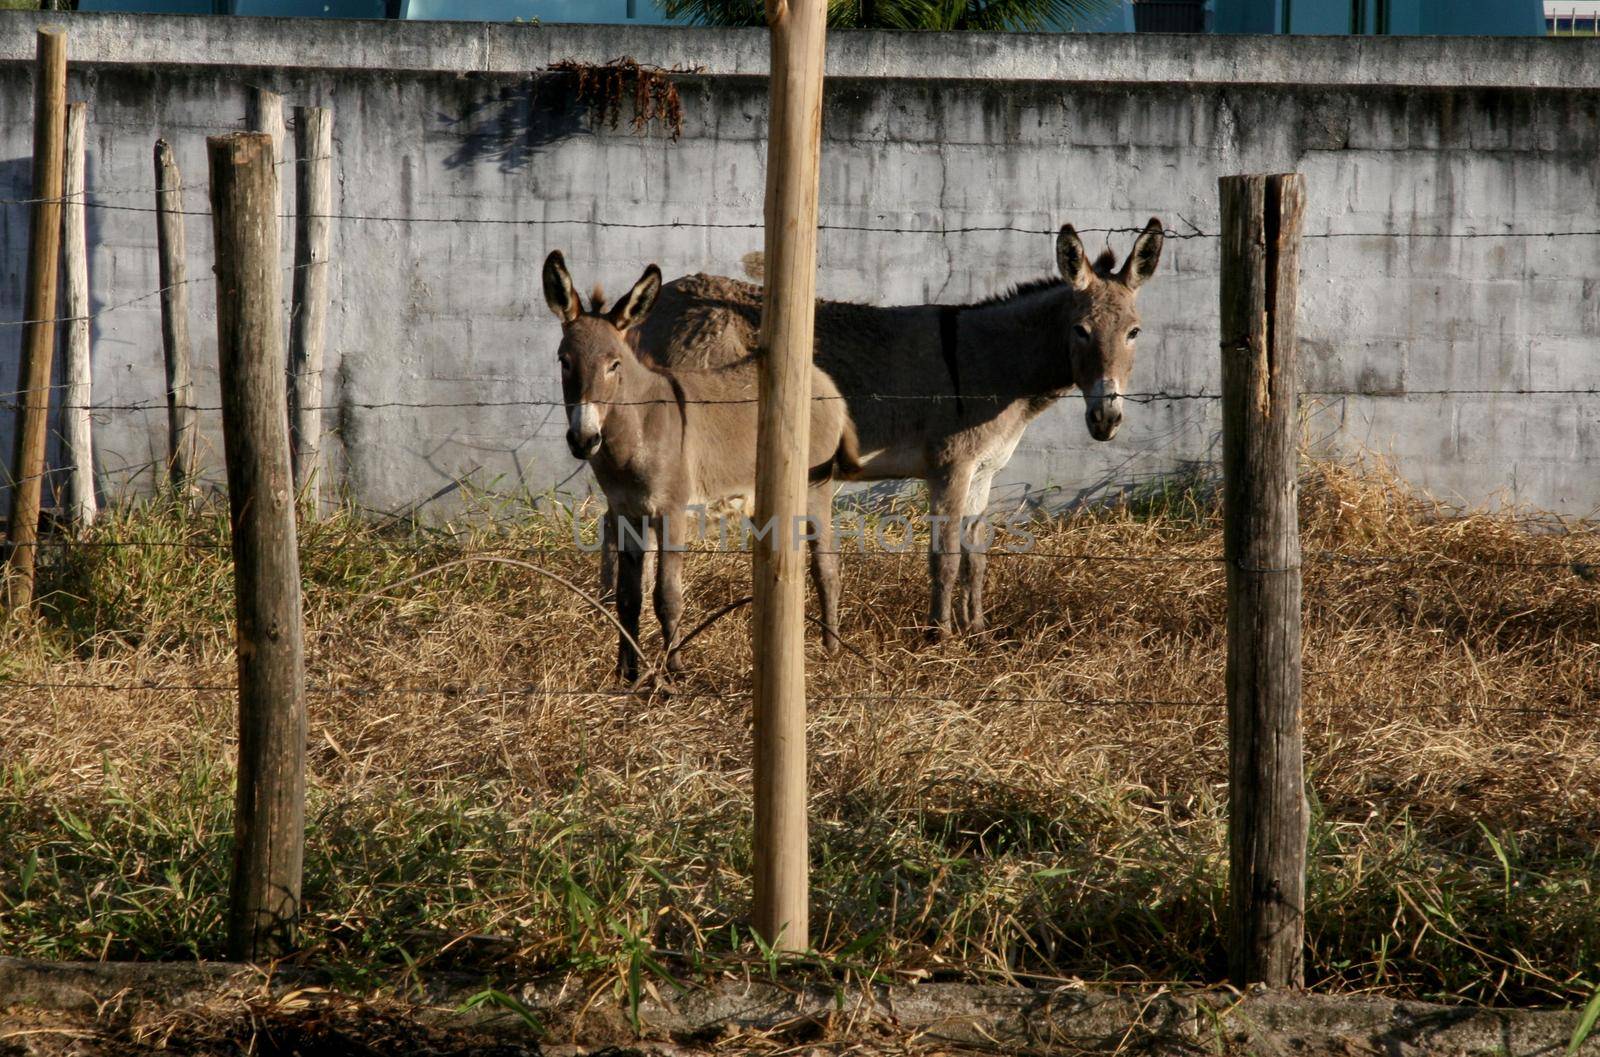 eunapolis, bahia / brazil - april 4, 2008: horses seized by the Zoonosis Control Center in the city of Eunapolis.